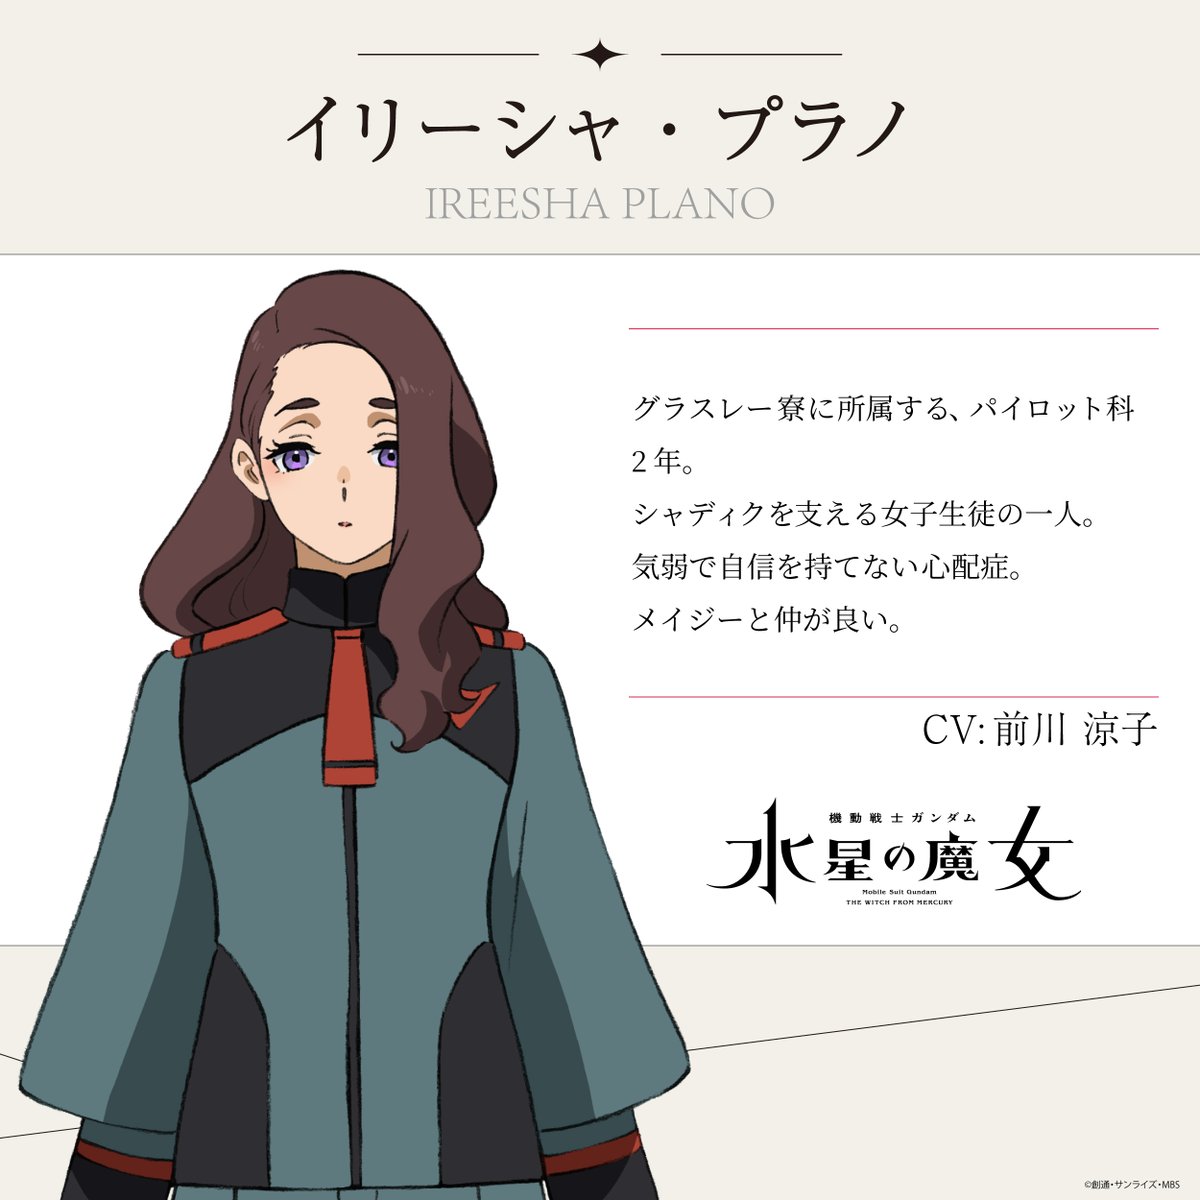 Mobile Suit Gundam: The Witch from Mercury Ryouko Maekawa trong vai Ireesha Plano